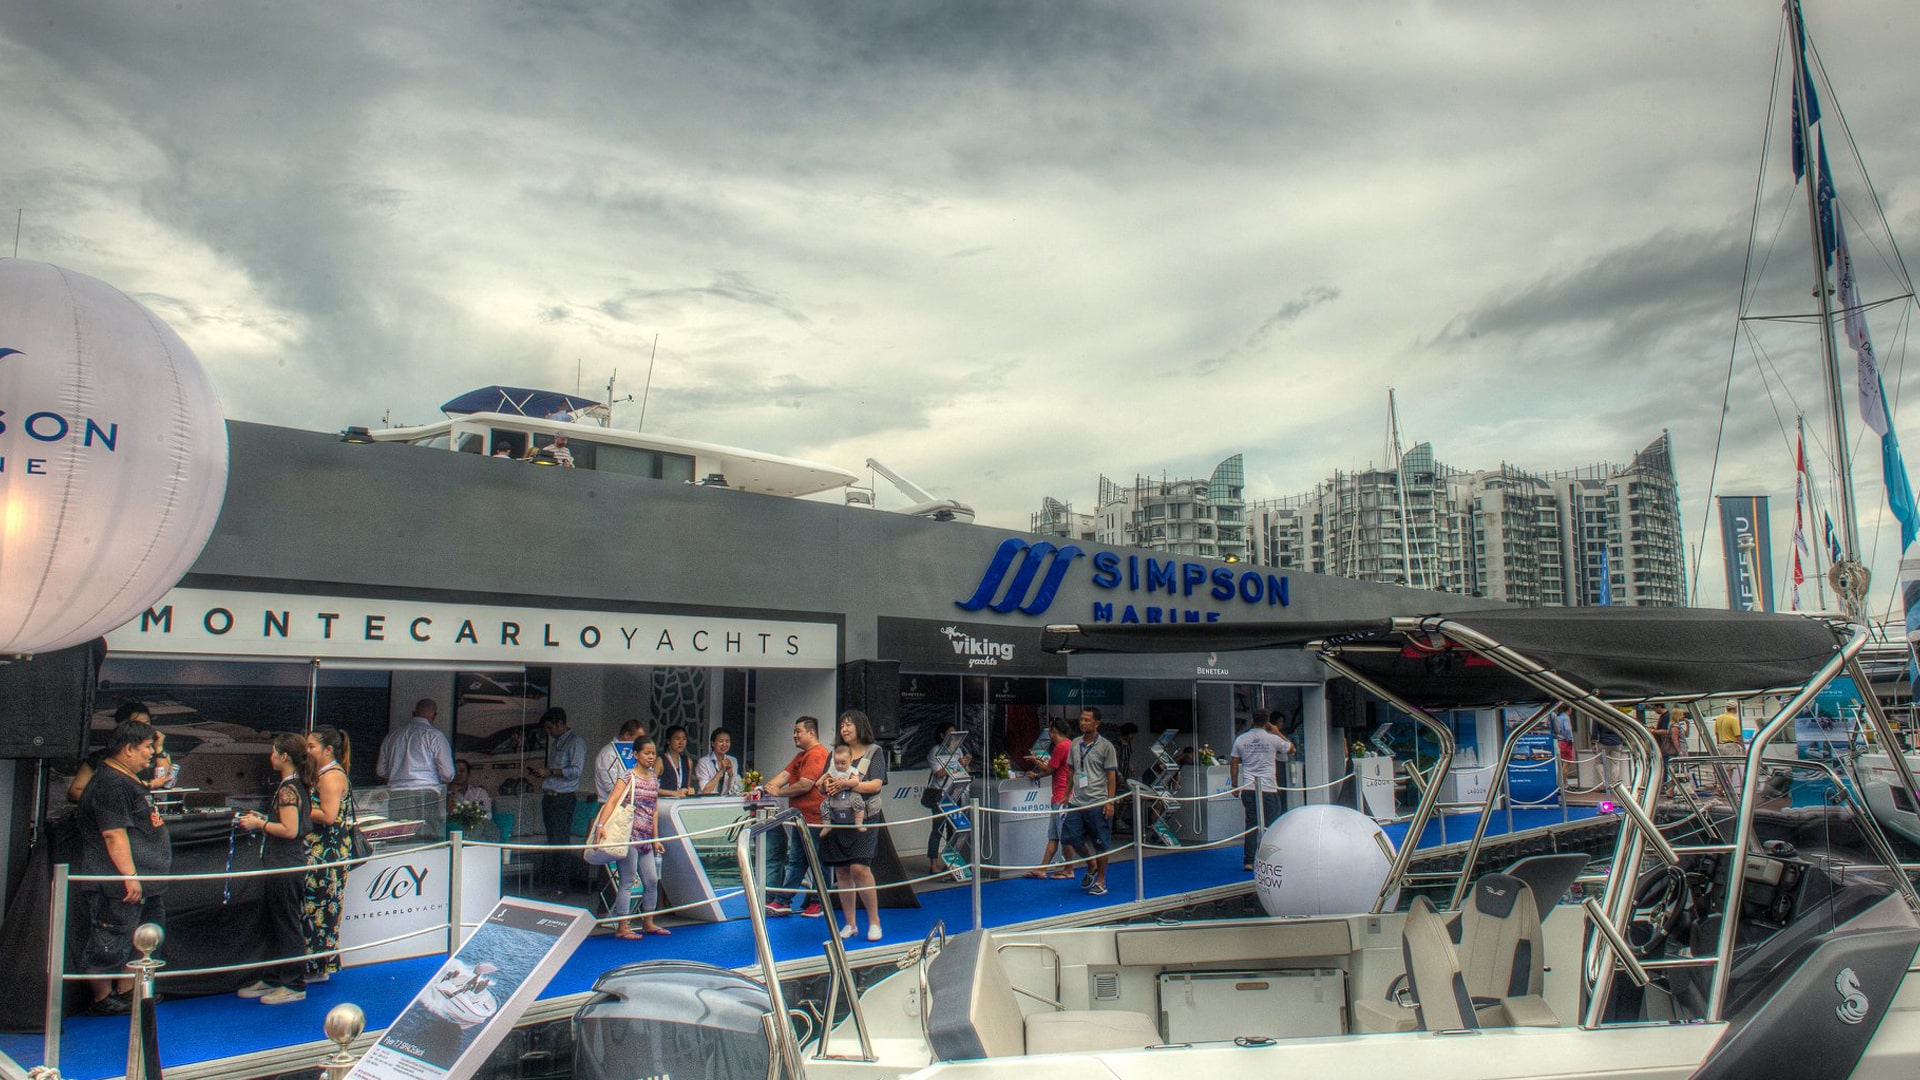 tsc_tubelar_exhibits_sg-yacht-show-2018-07_1920x1080-min